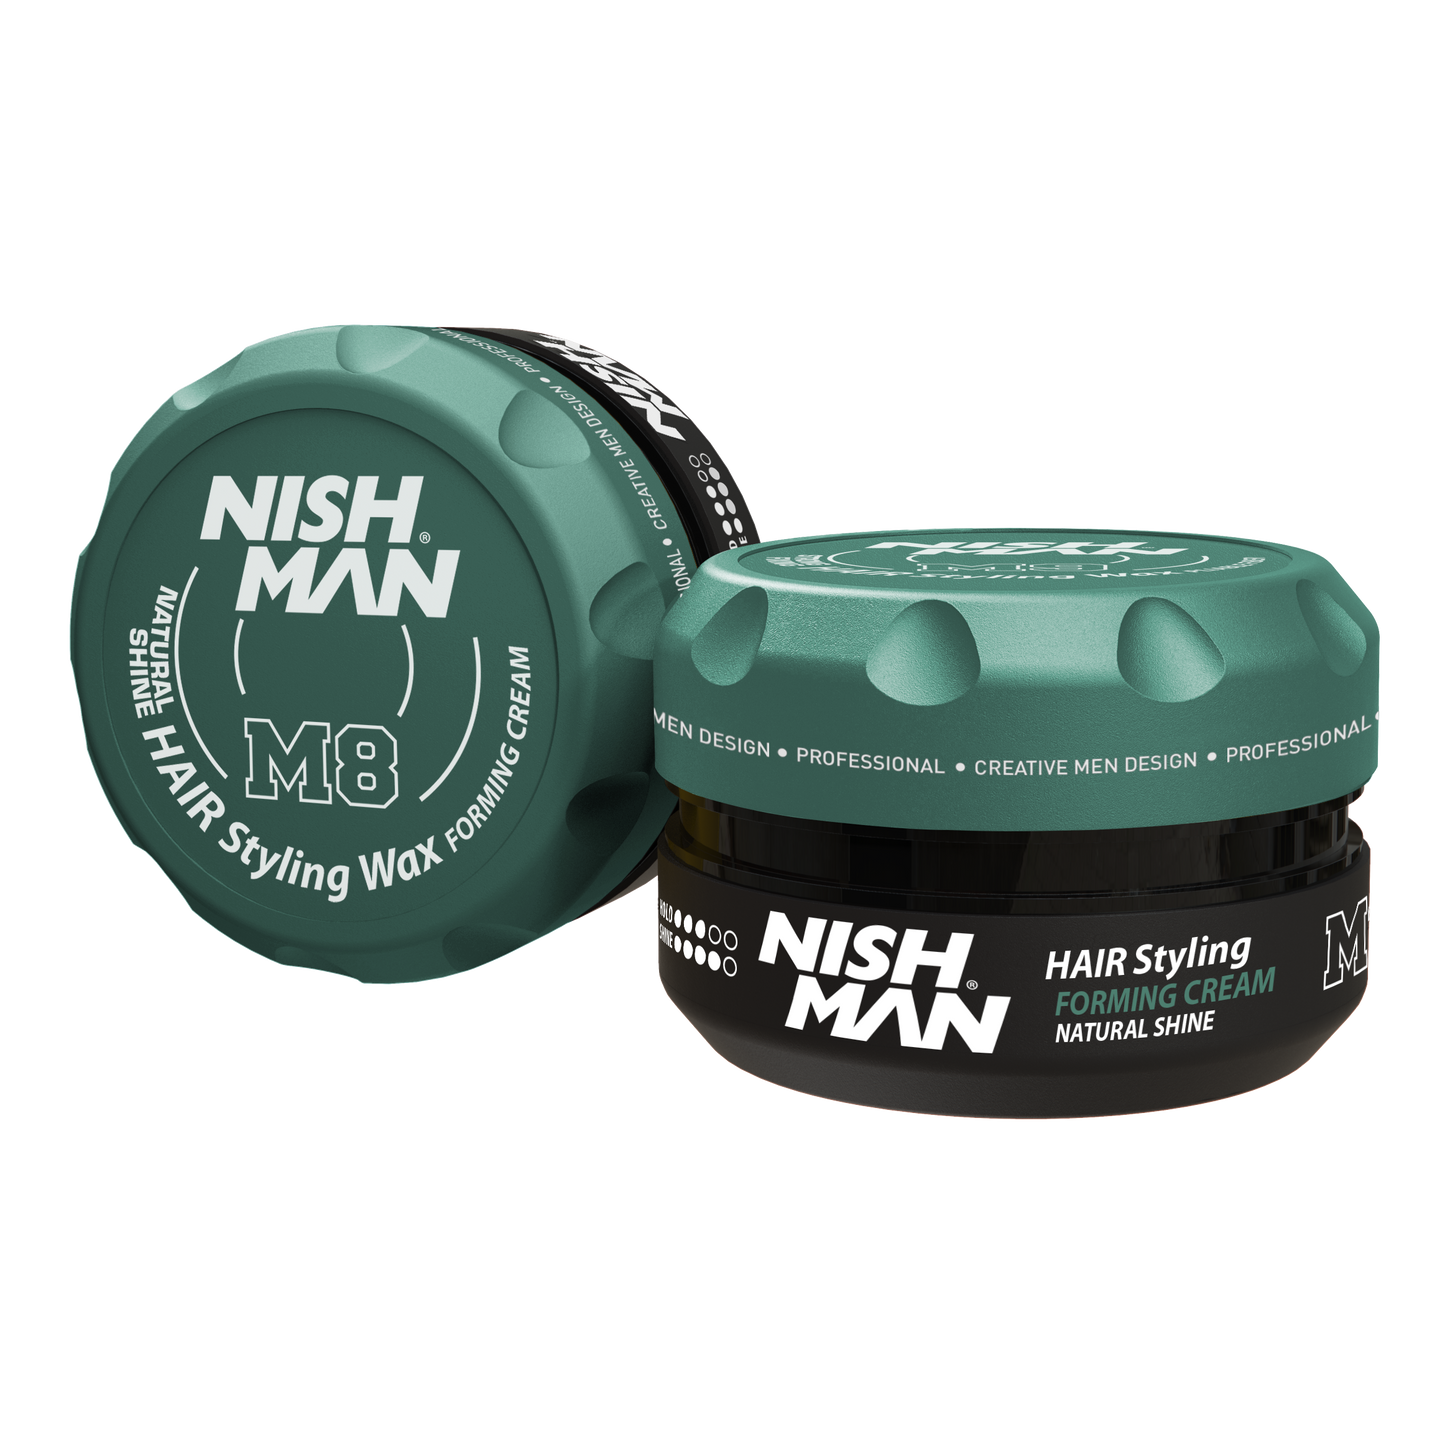 NISHMAN Natural Shine Hair Styling Wax Forming Cream - M8